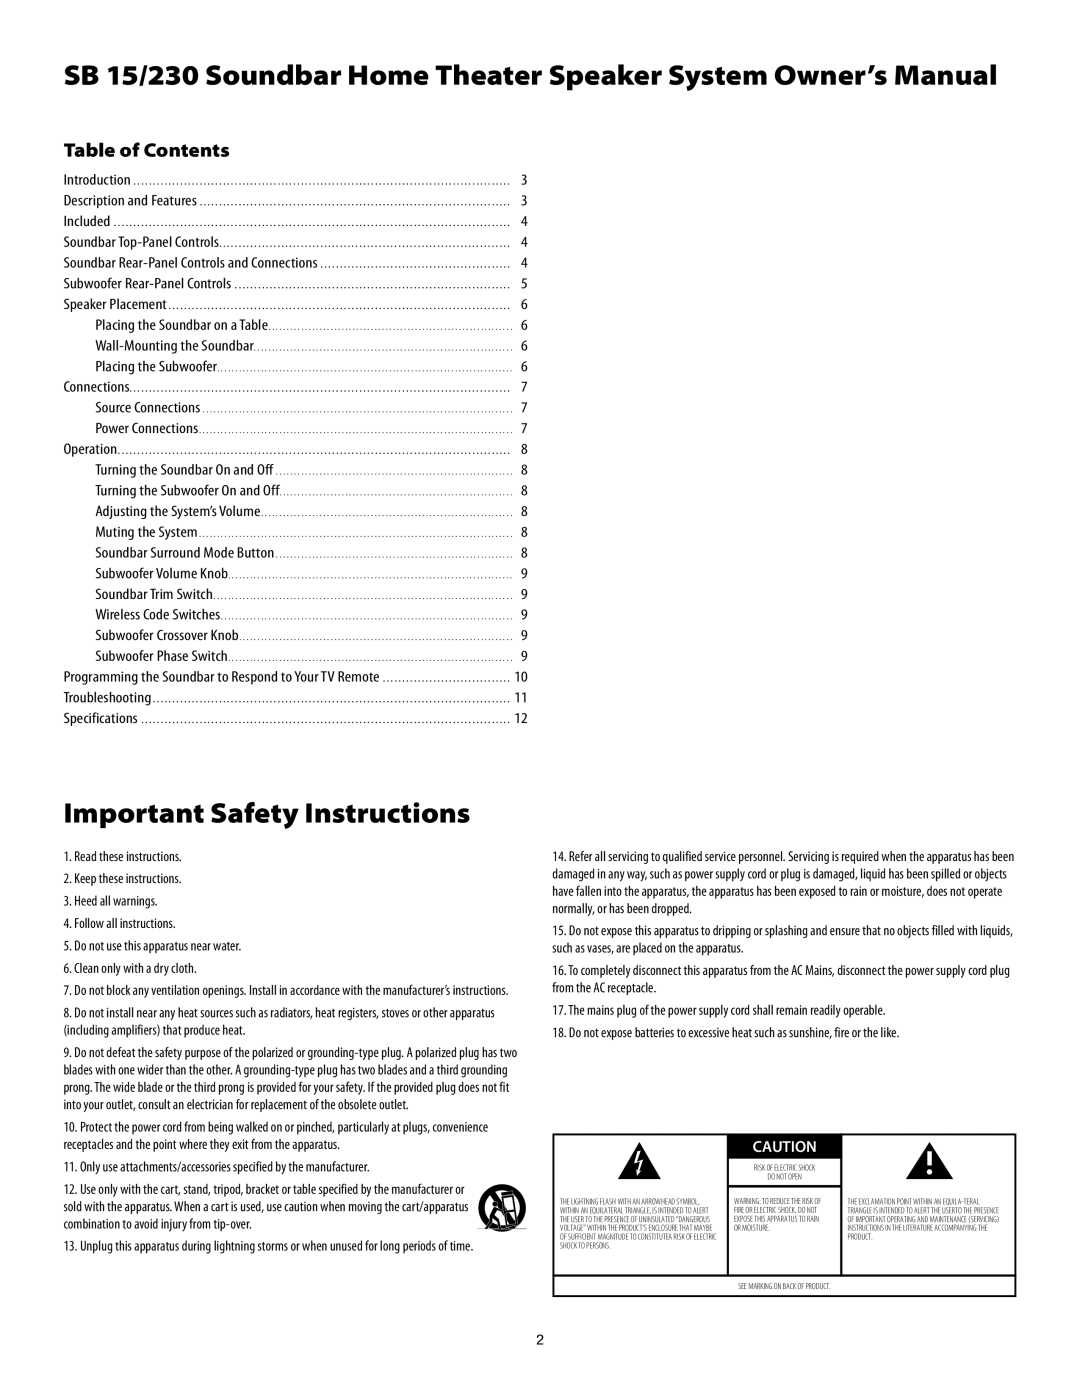 Harman-Kardon SB15/230 manual Important Safety Instructions, Table of Contents 